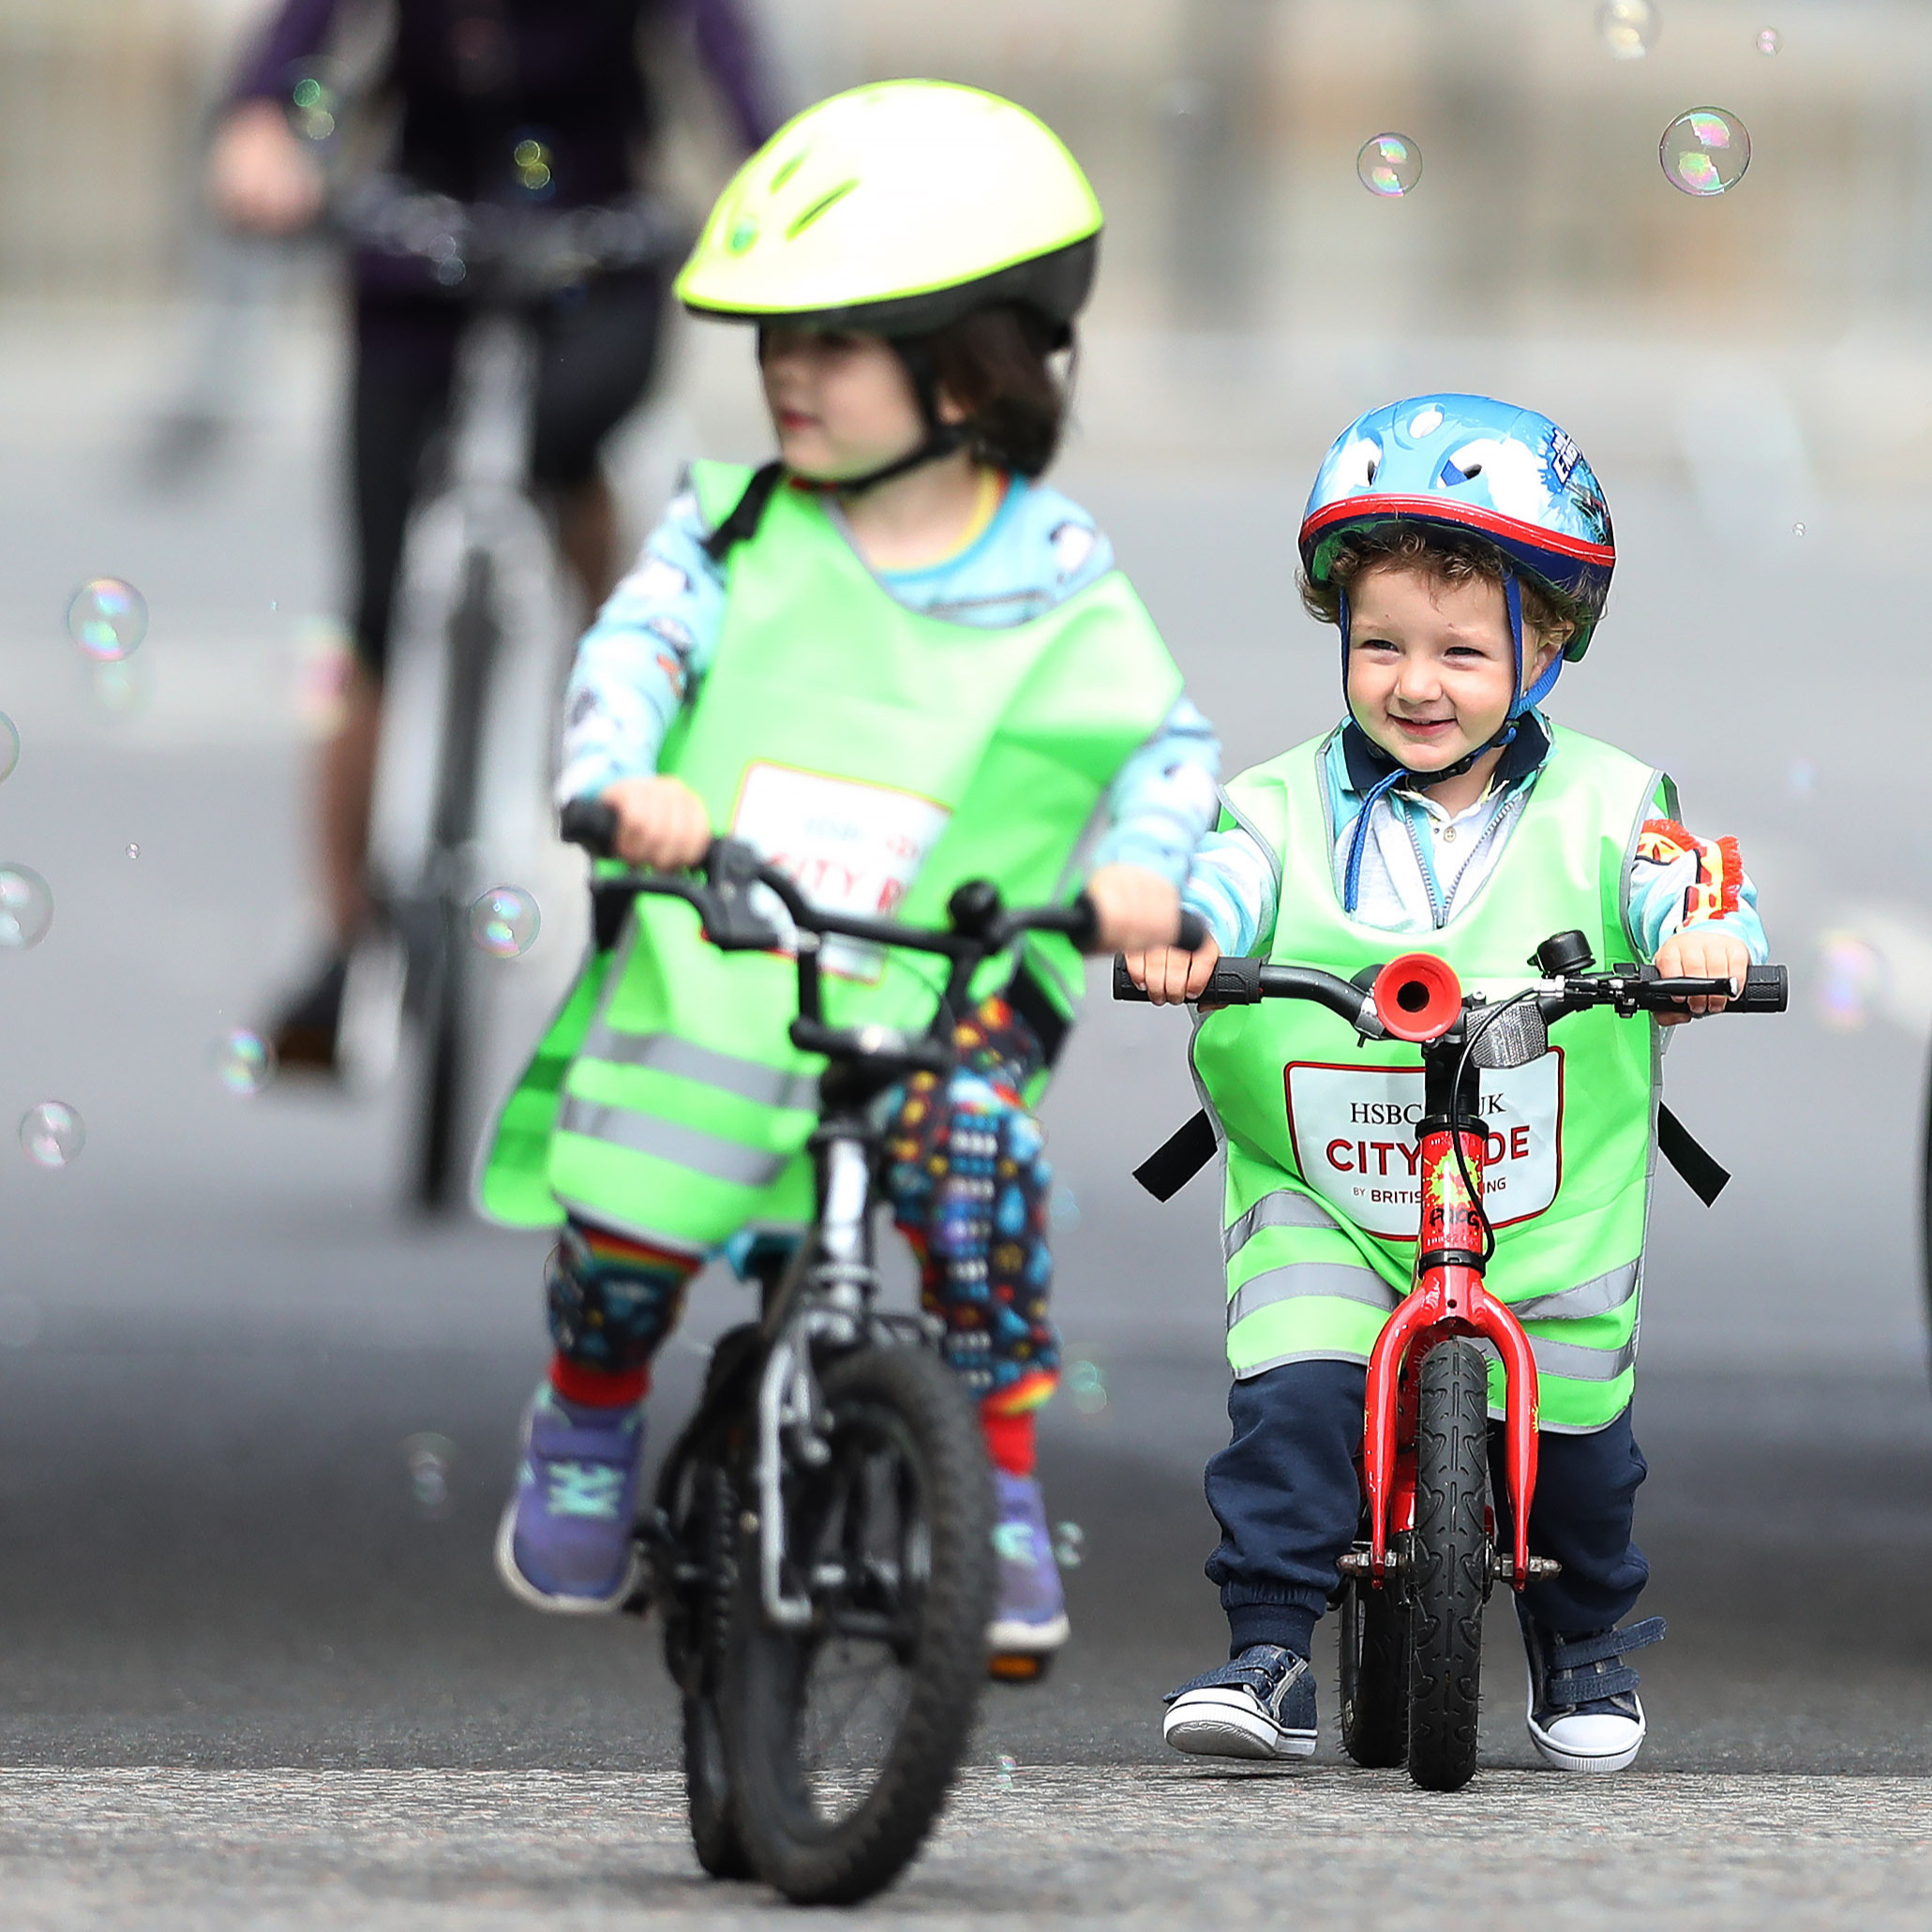 Children taking part in HSBC UK City Ride